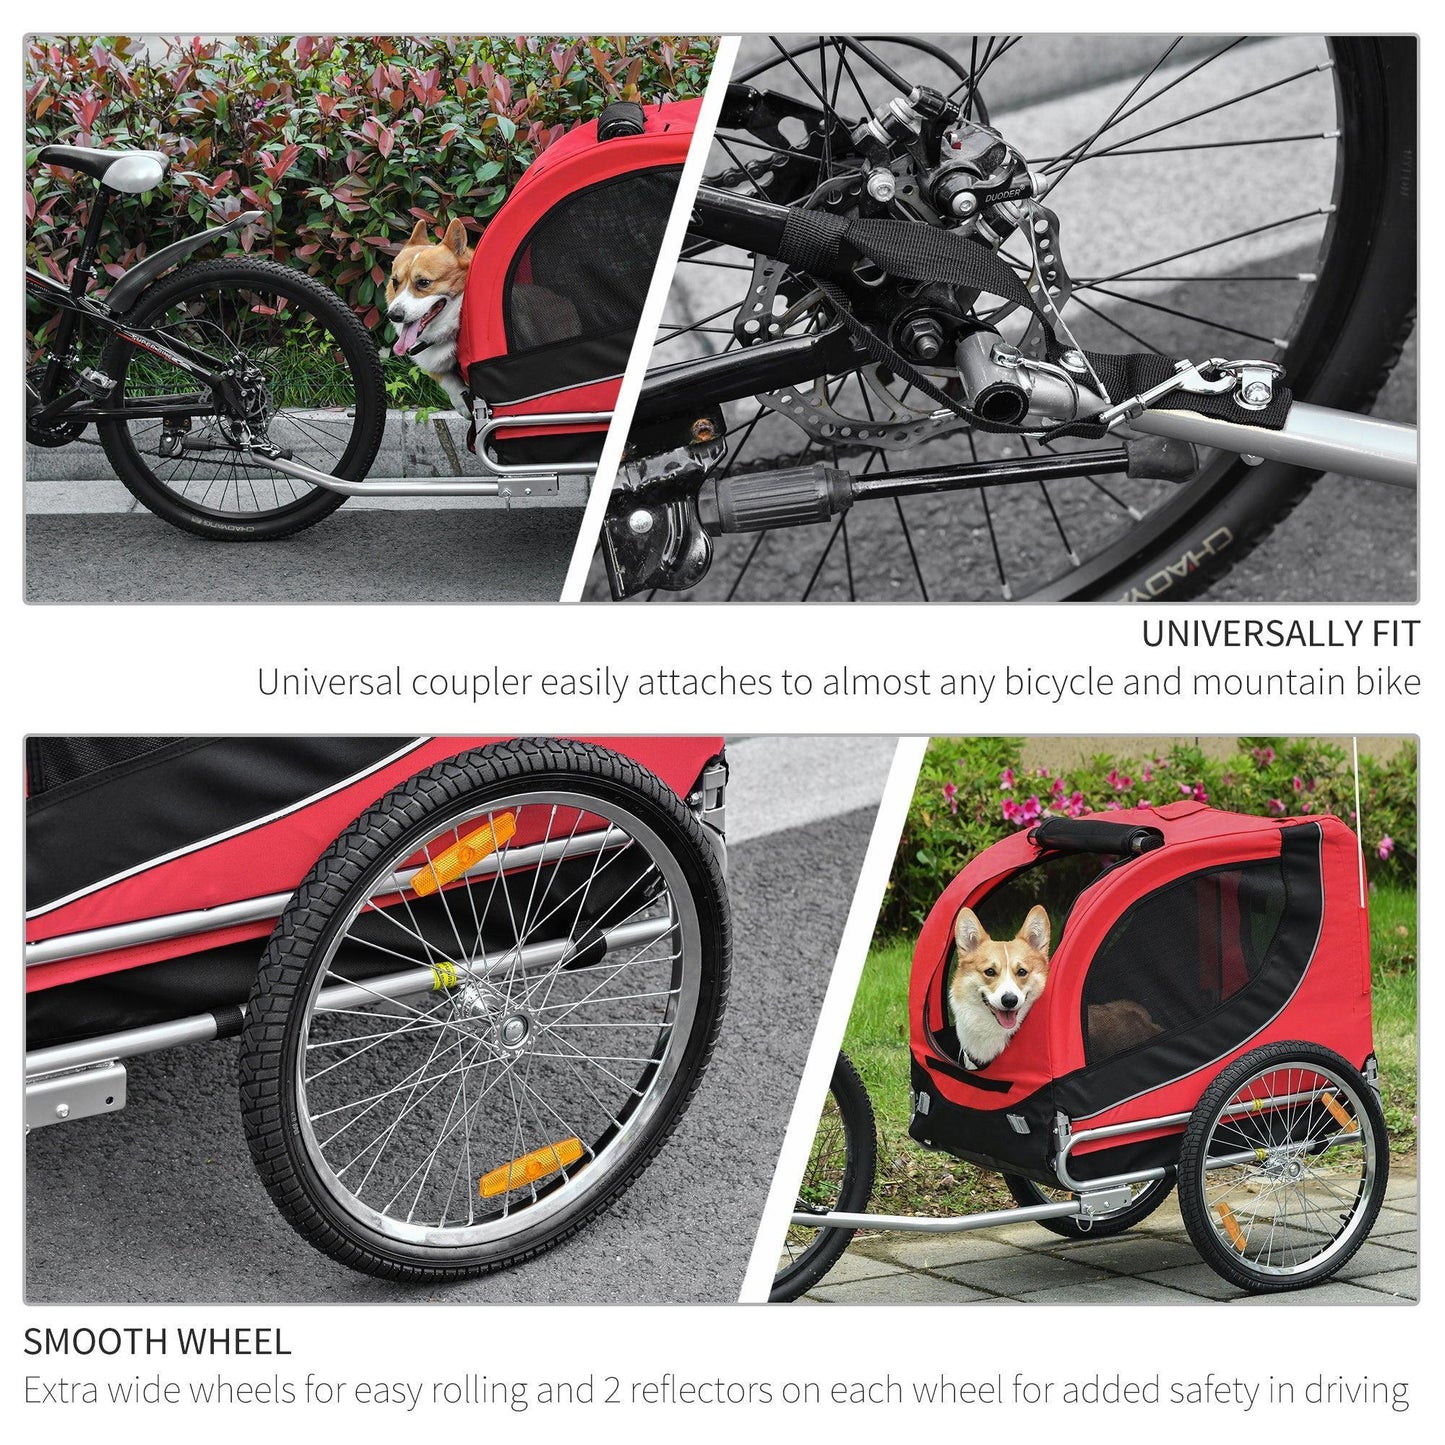 Pawhut Folding Dog Bike Trailer - Red - ALL4U RETAILER LTD